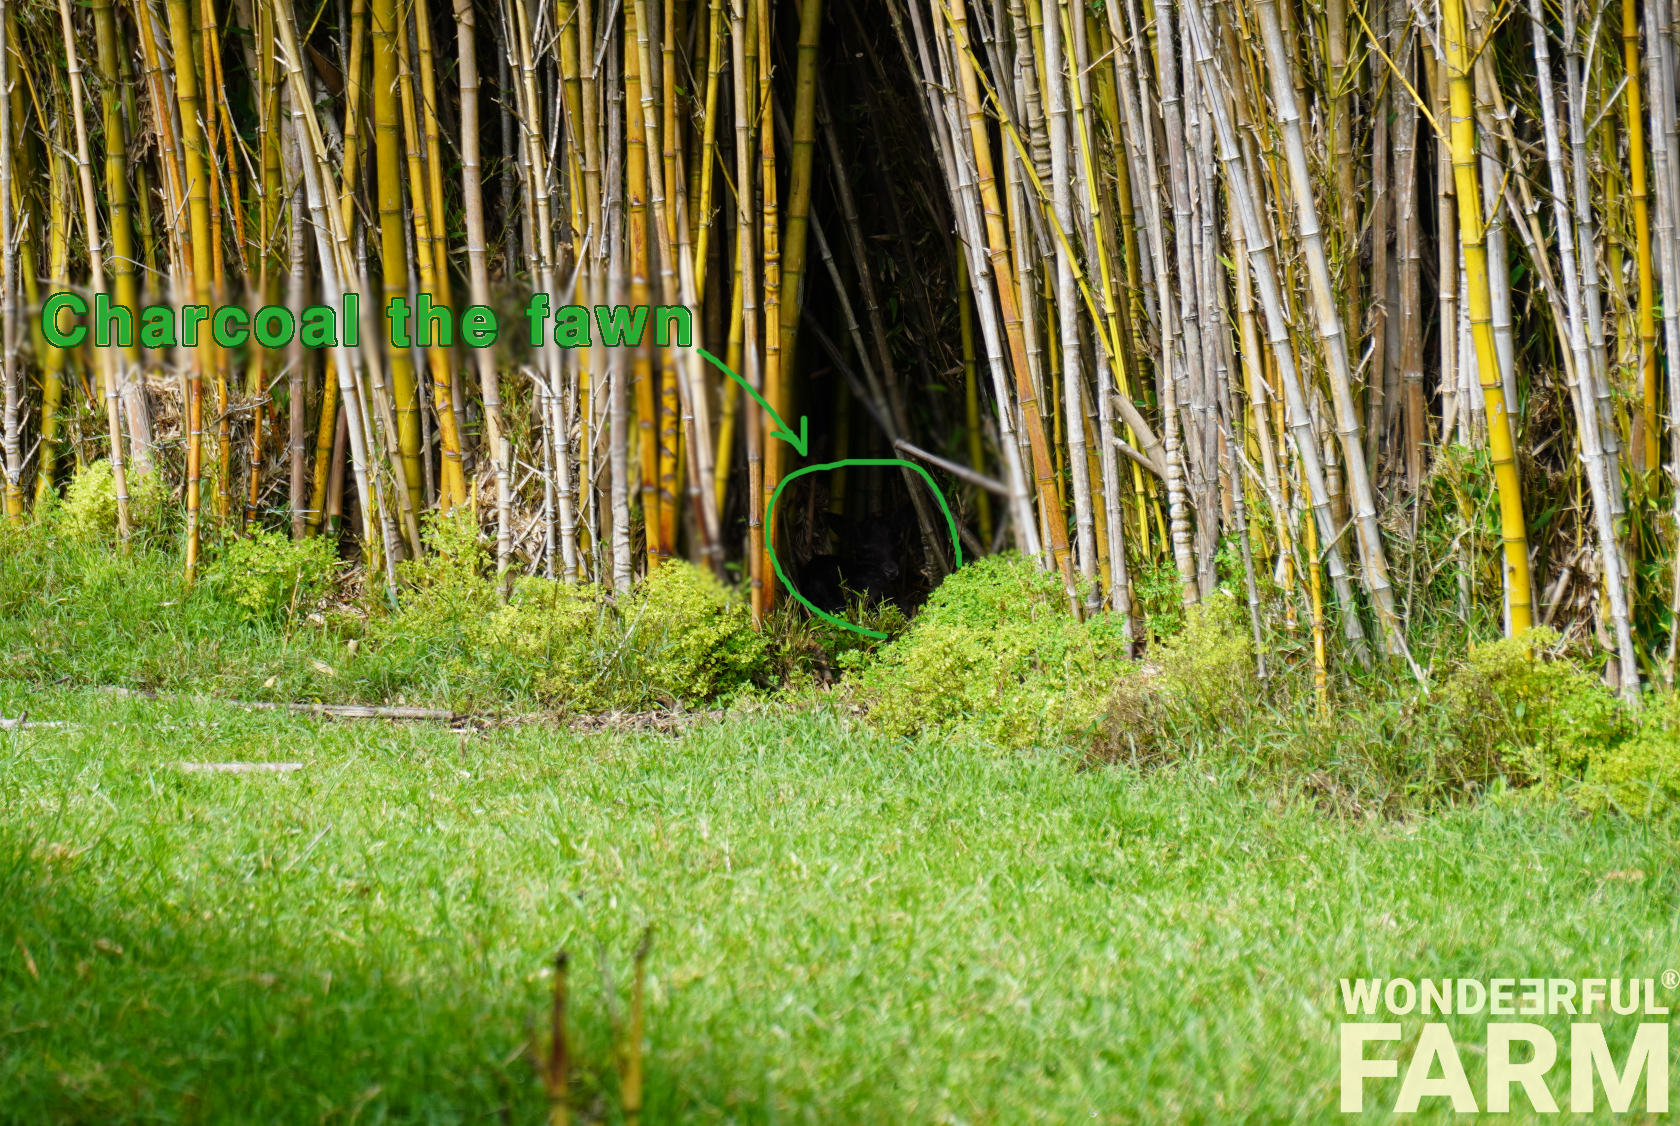 newborn baby deer hiding alone in bamboo